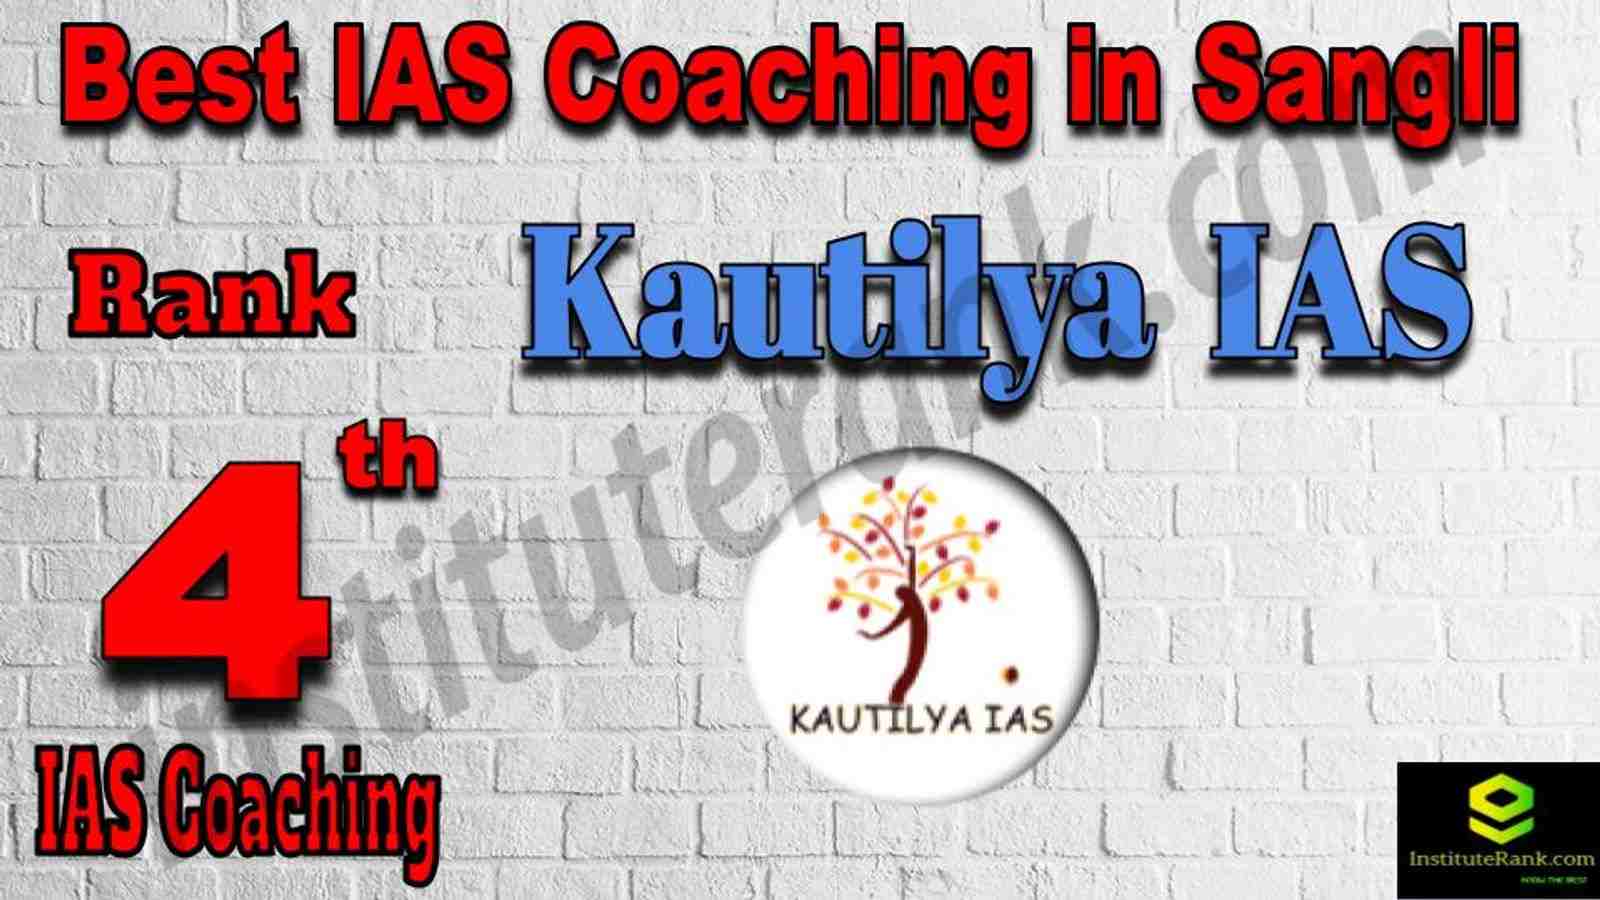 4th Best IAS Coaching in Sangli